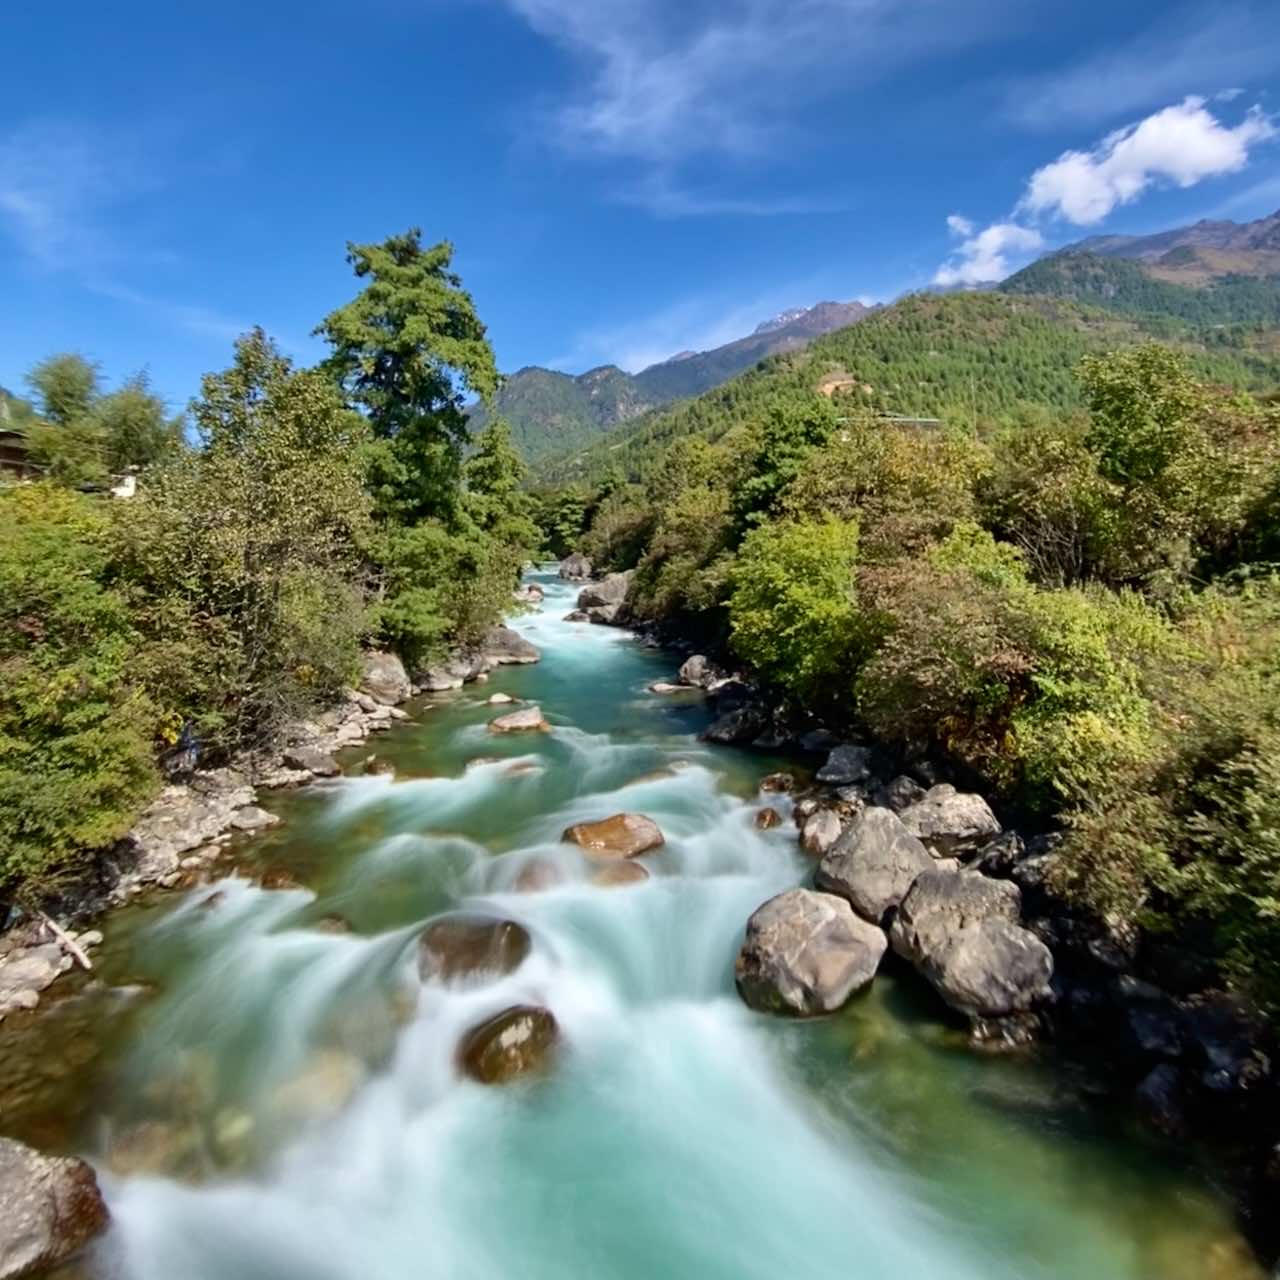 A long exposure river photo outside of Paro in Bhutan